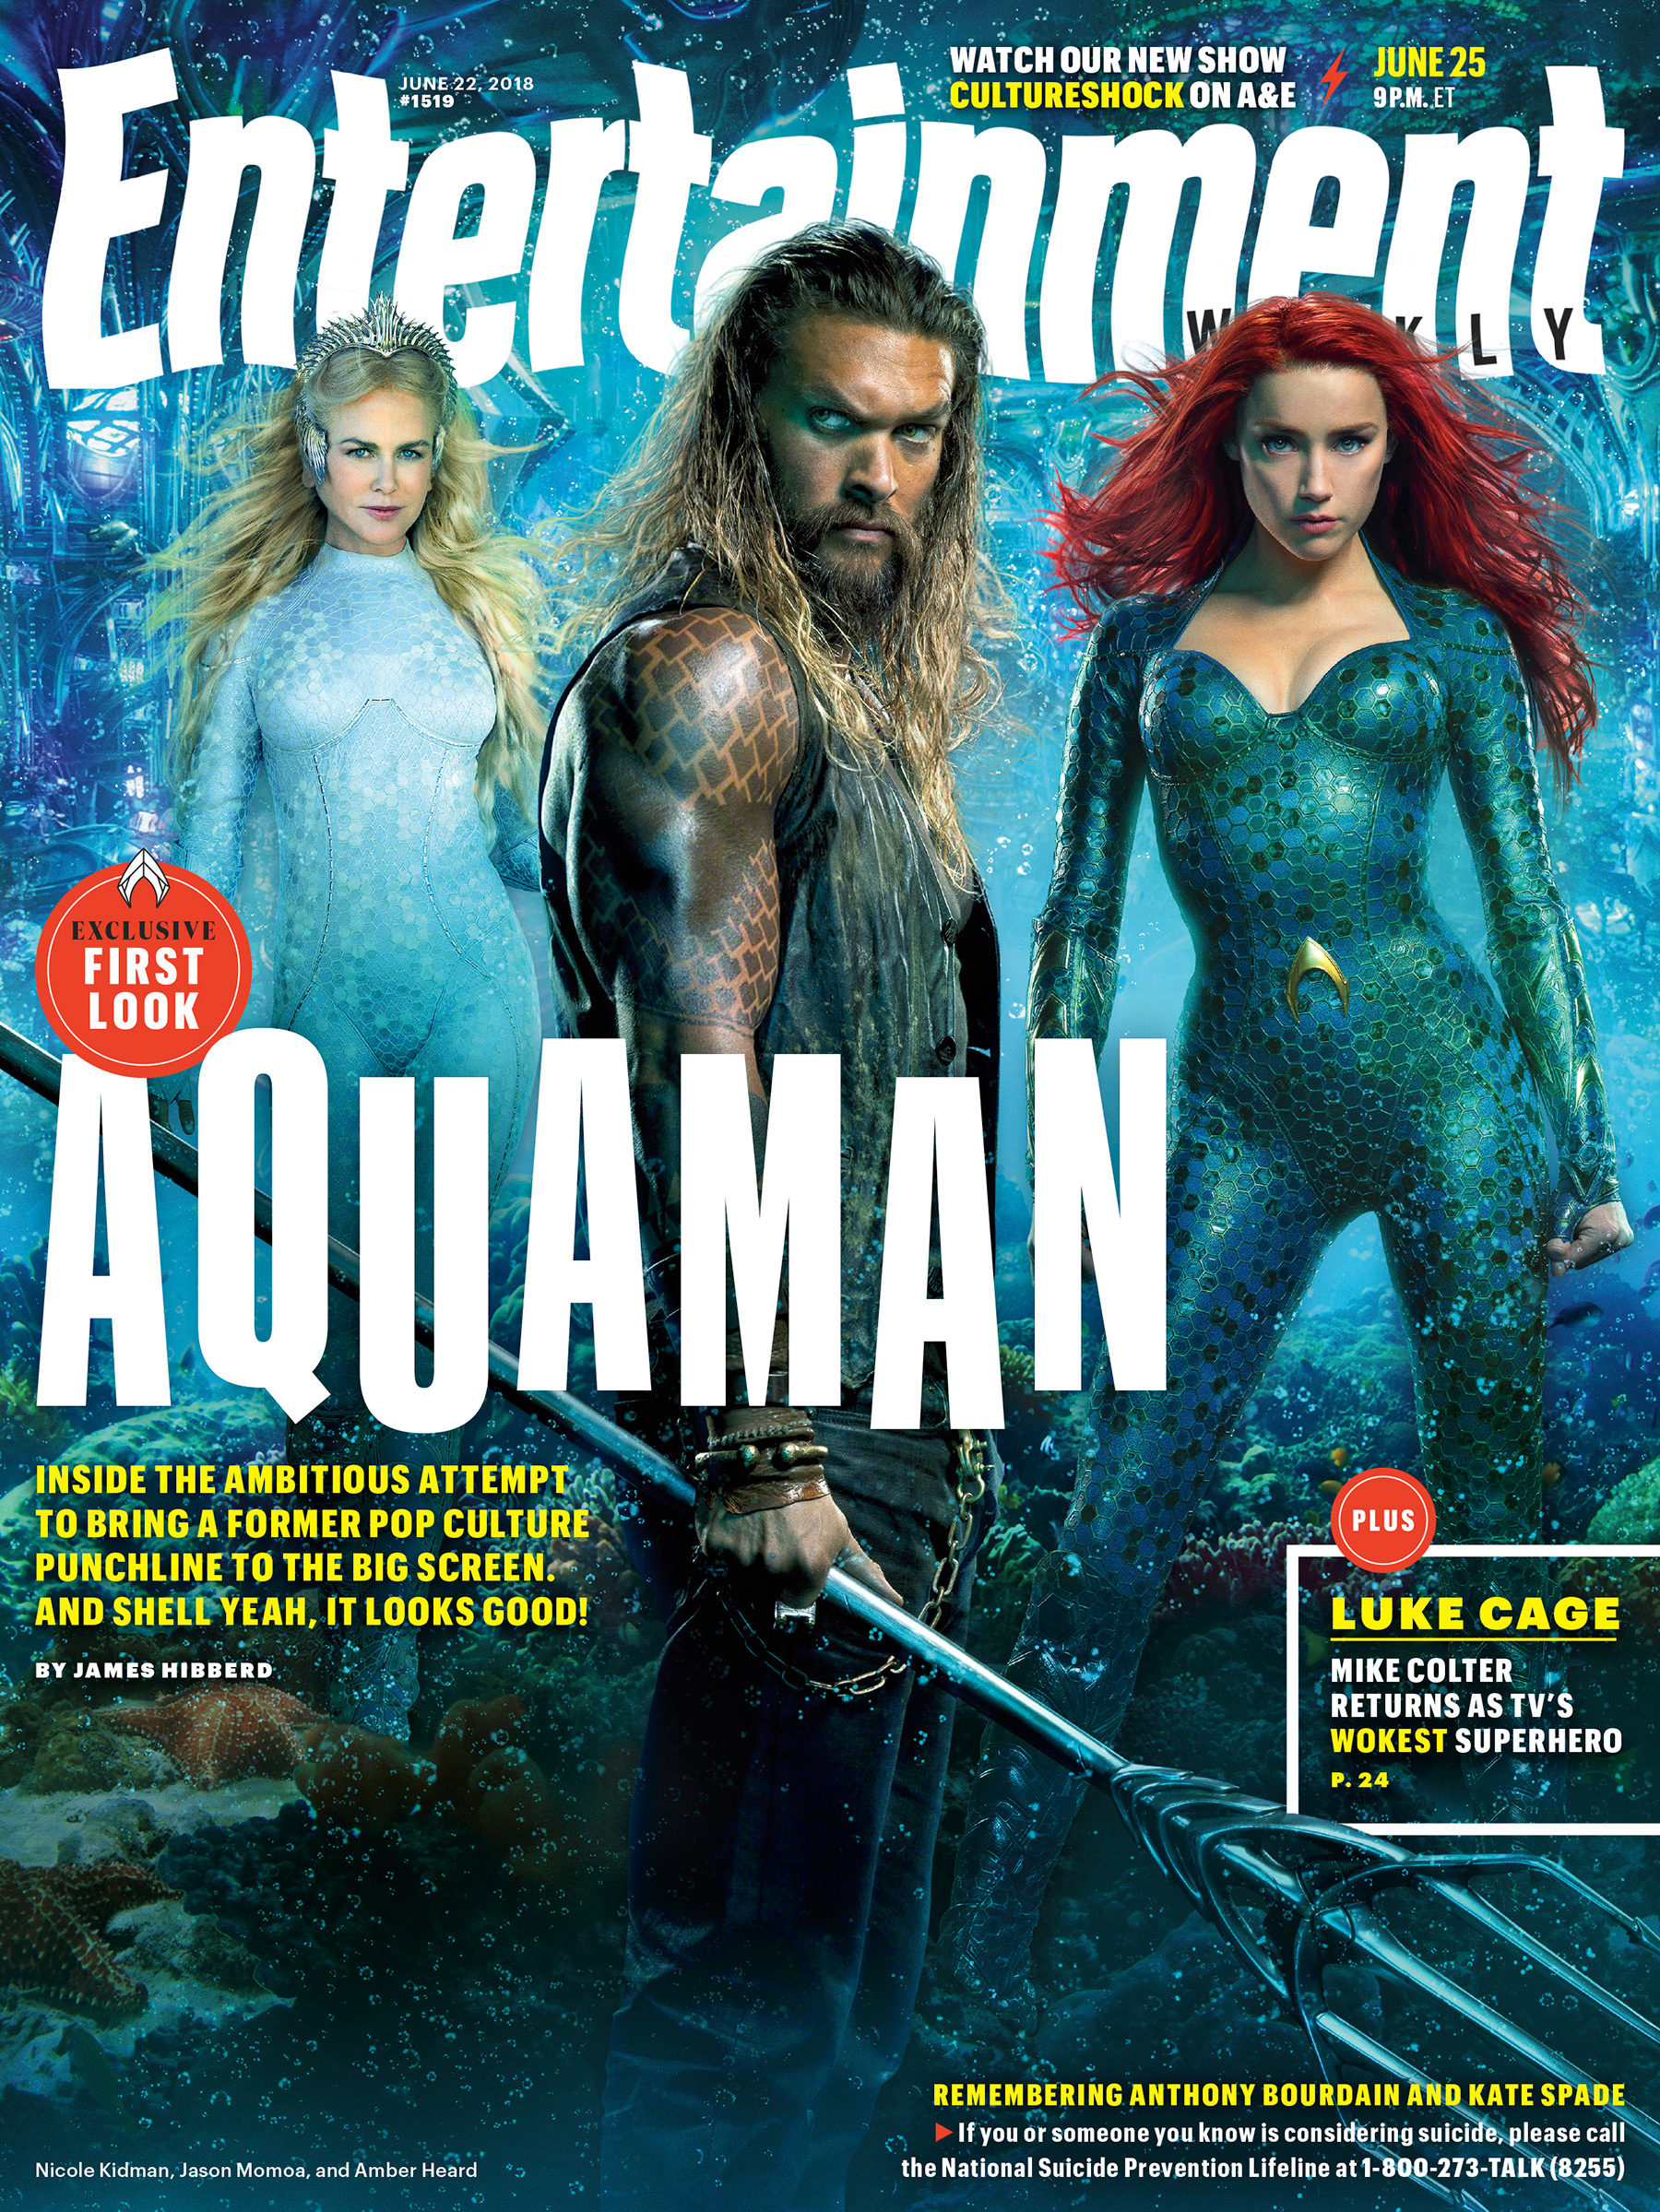 Aquaman Entertainment Weekly Cover June 25, 2018